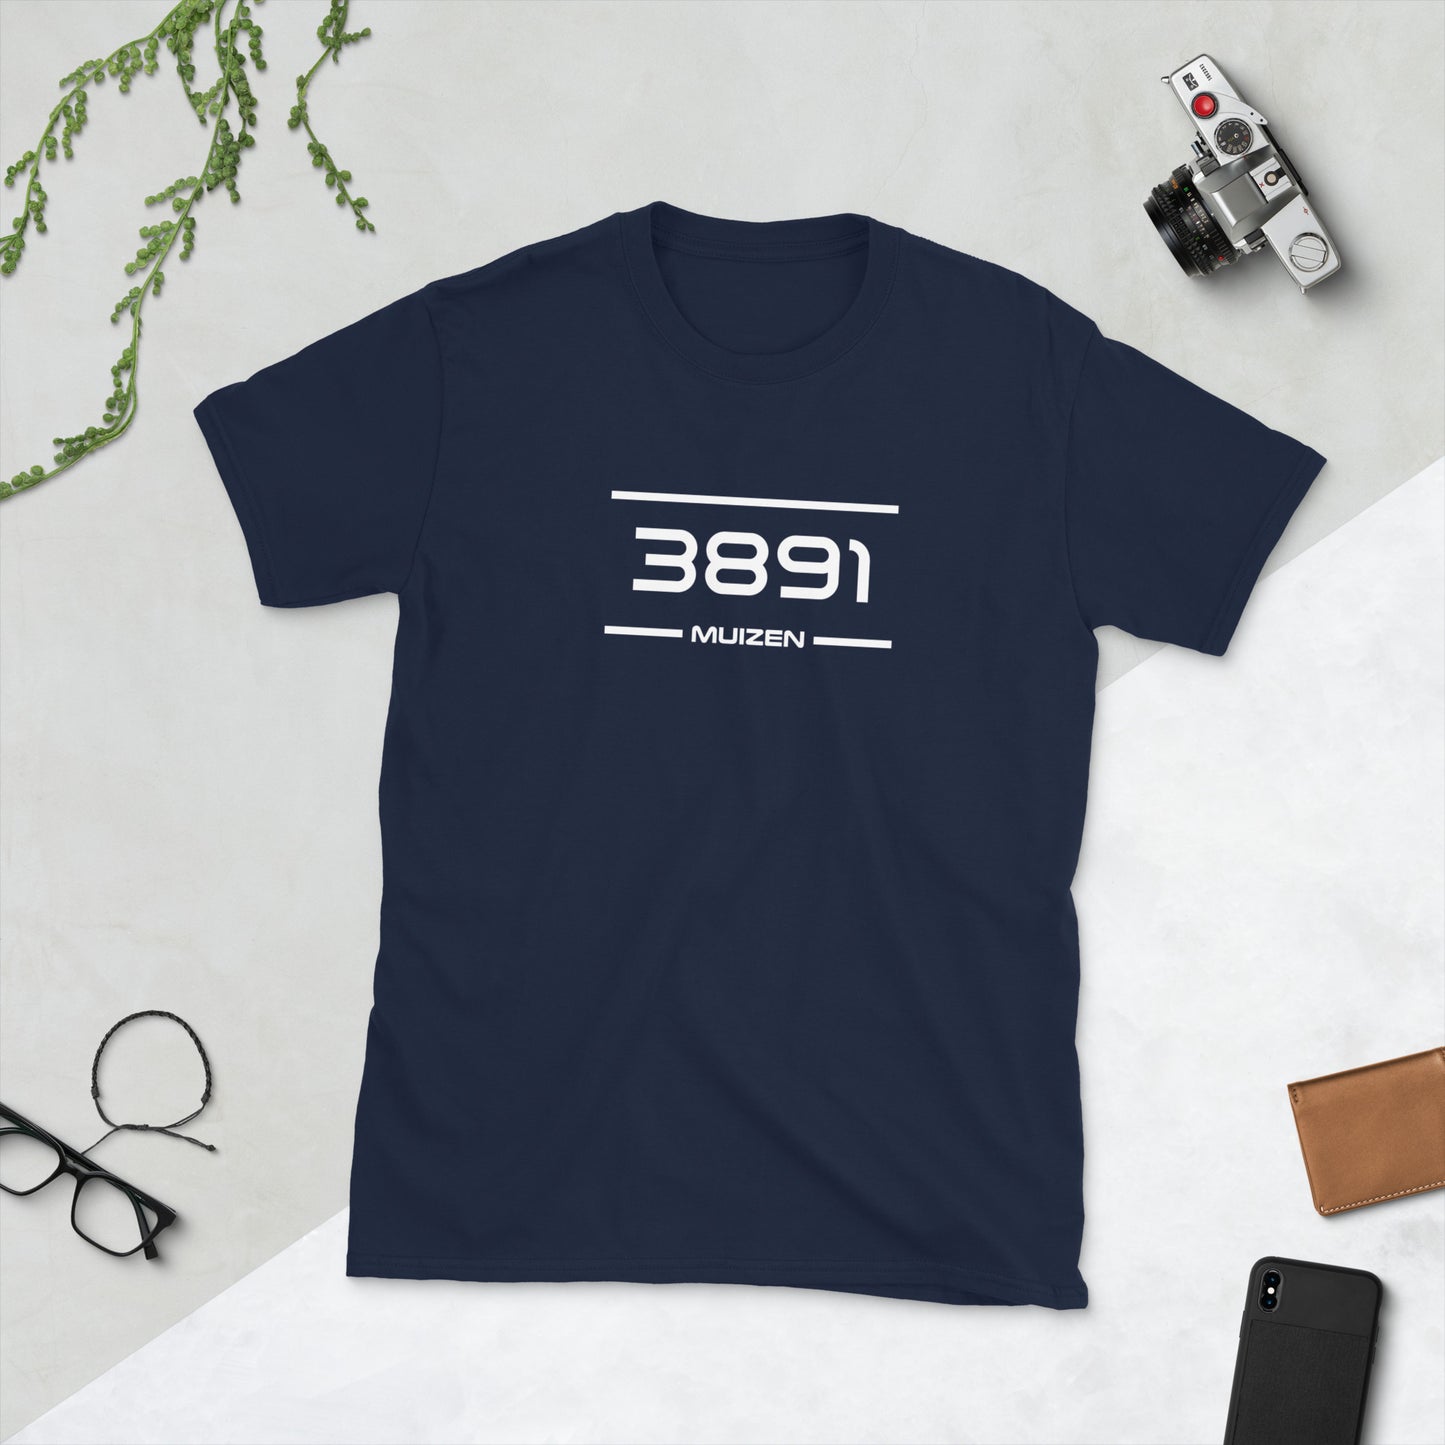 Tshirt - 3891 - Muizen